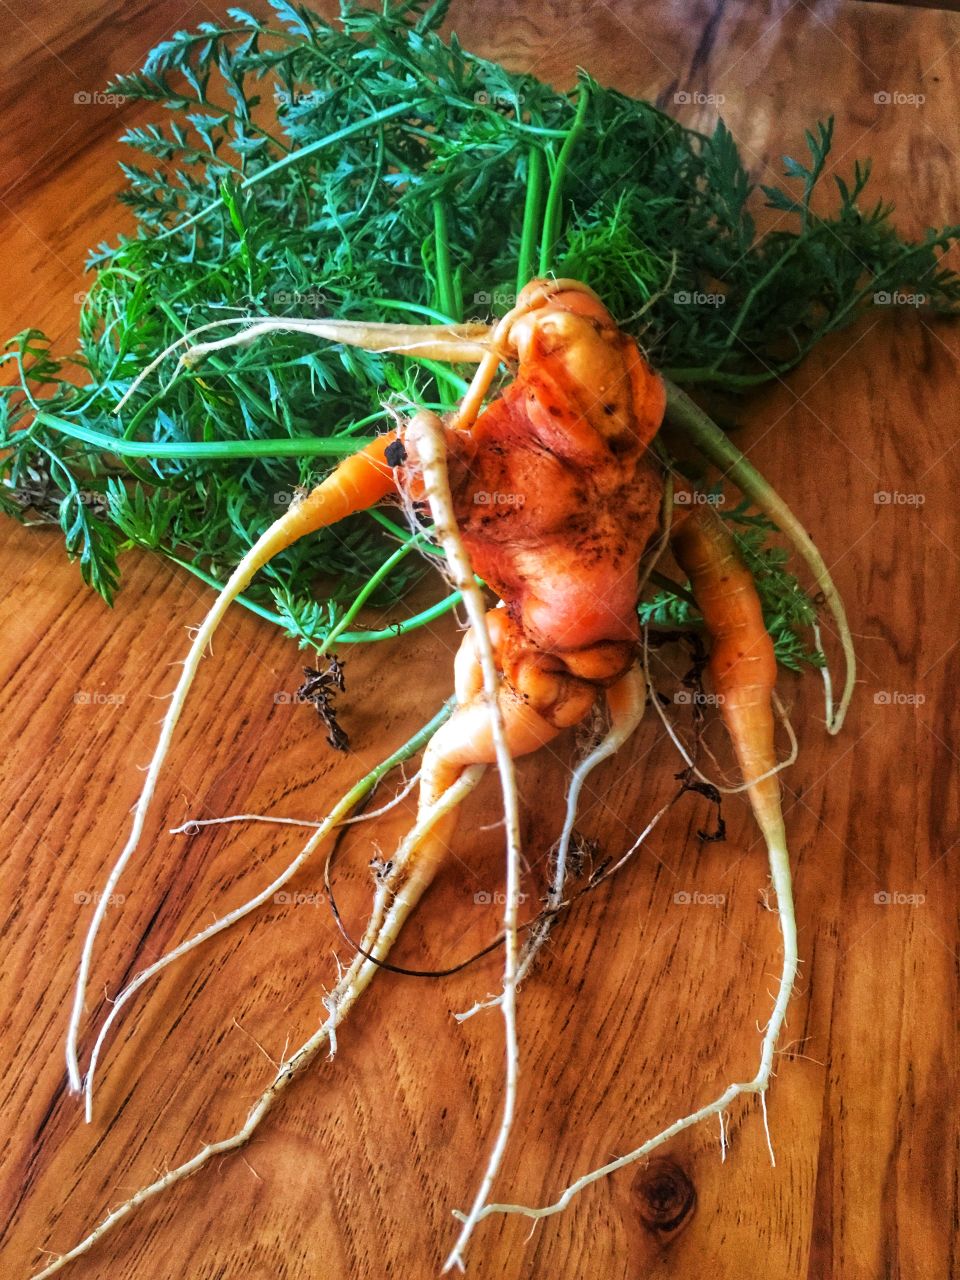 Deformed carrot